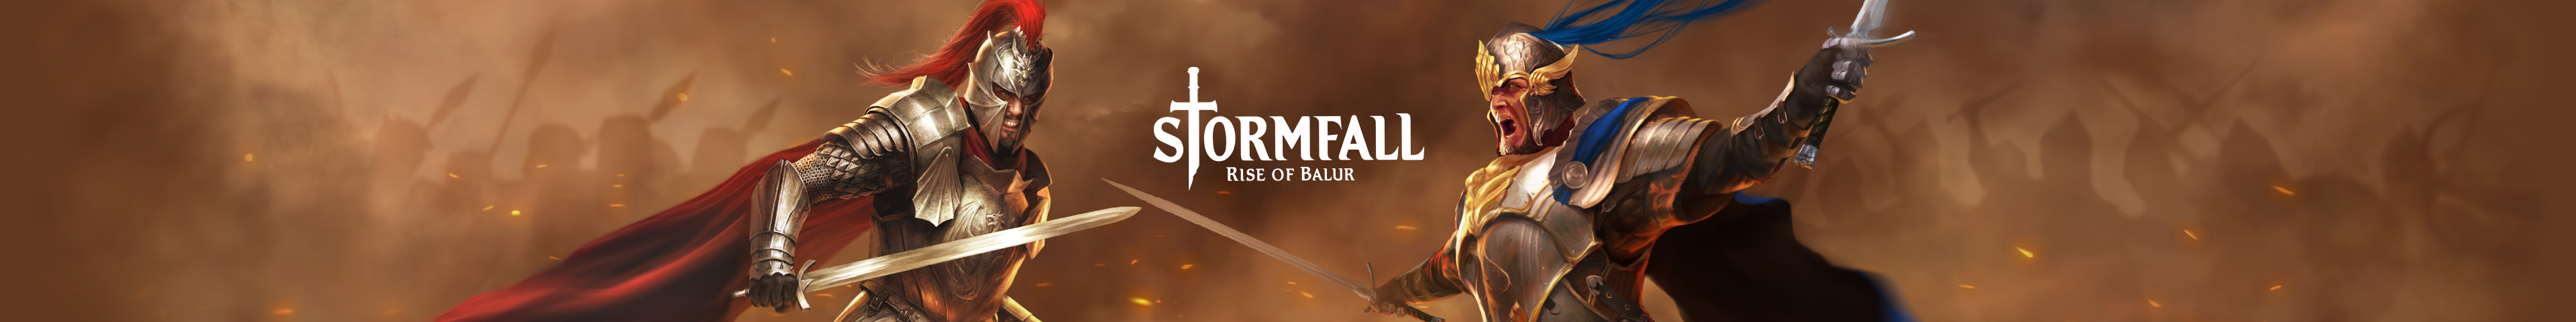 Stormfall: Rise of Balur - Gathering of Warriors